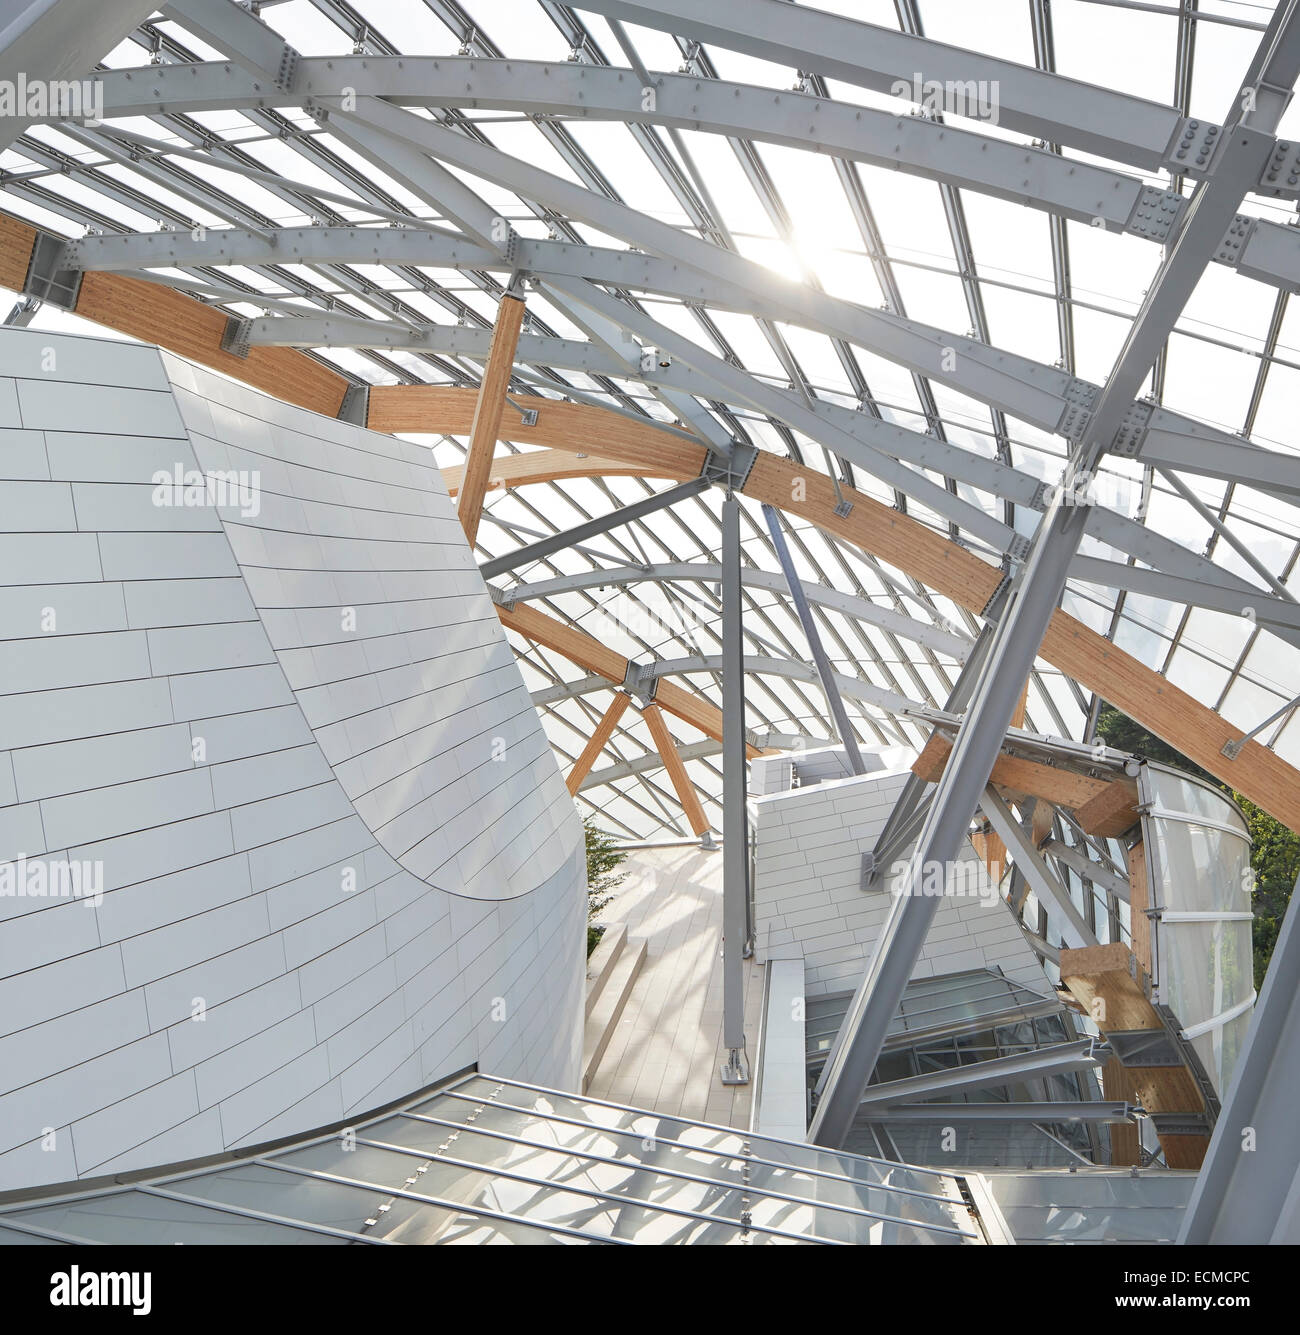 Fondation Louis Vuitton, Paris, France. Architect: Gehry Partners Stock Photo, Royalty Free ...